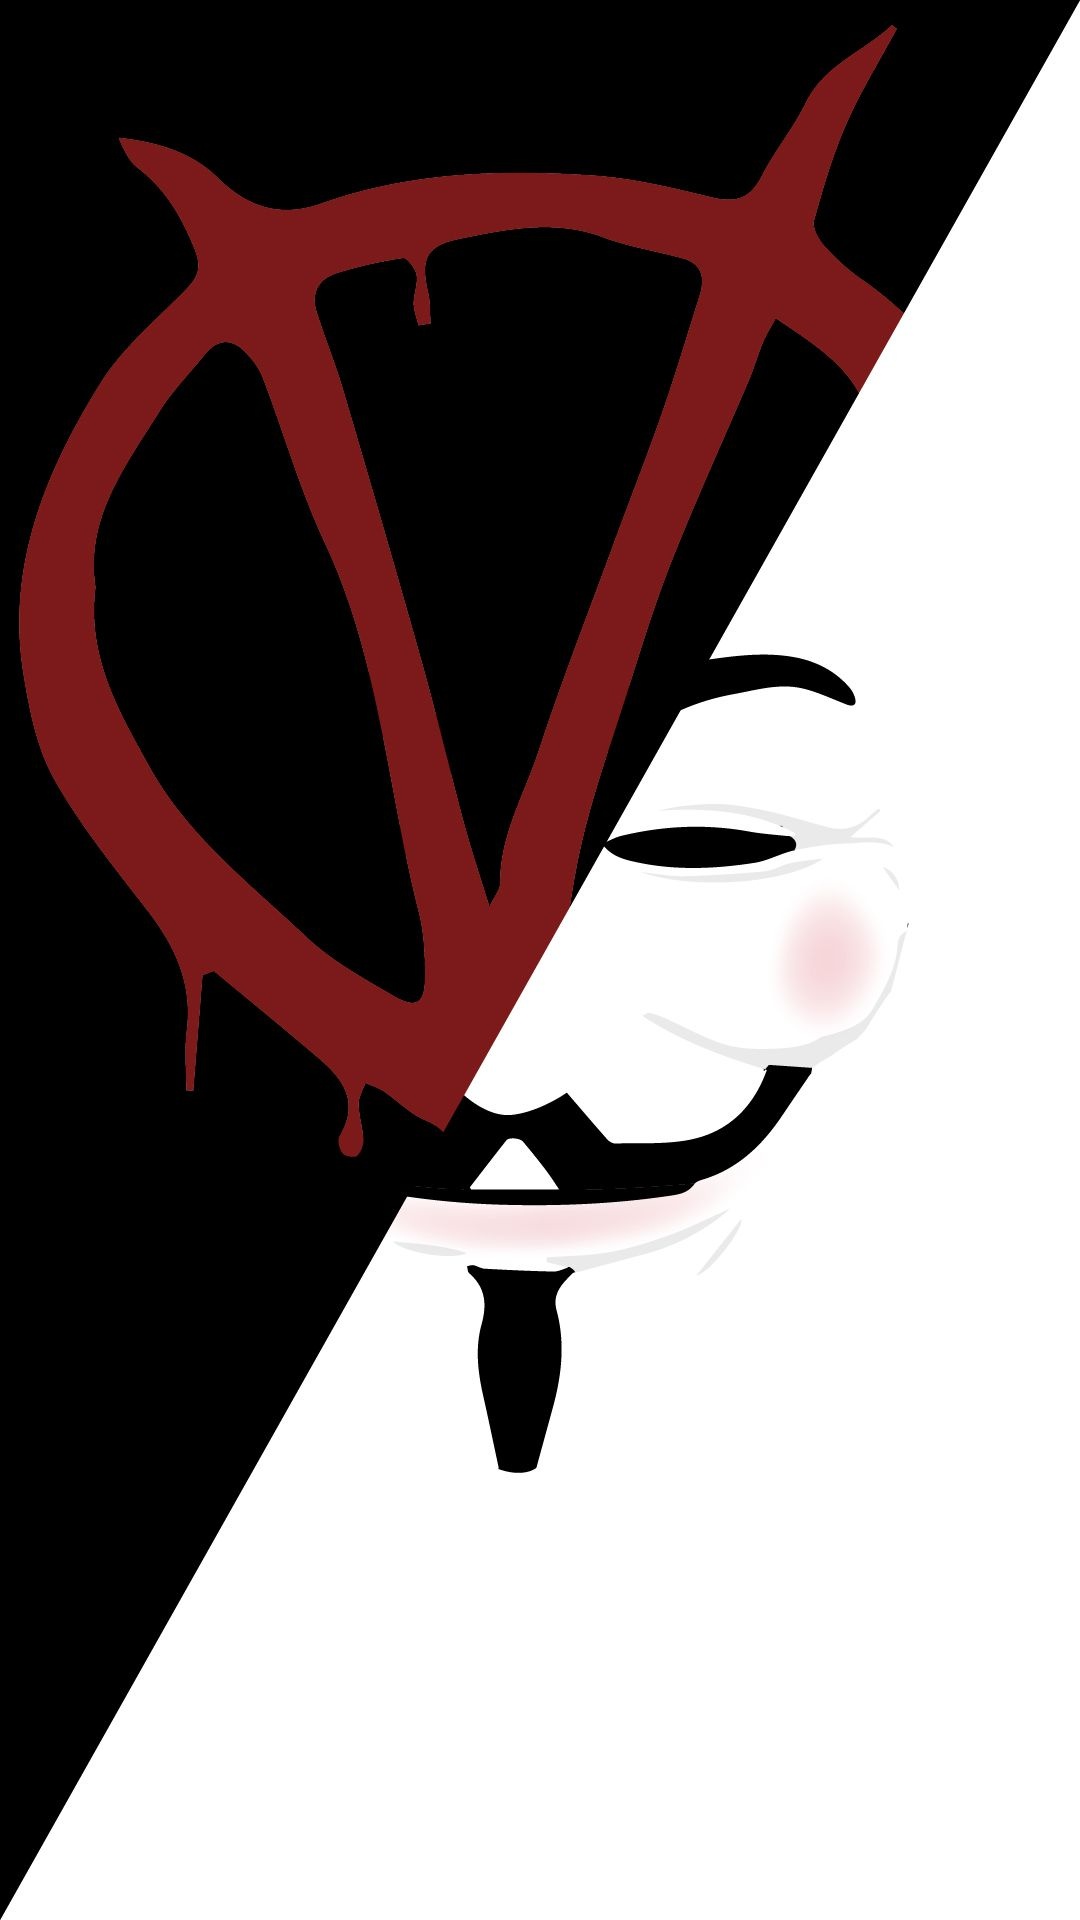 V for Vendetta: Guy Fawkes mask, Symbolic, Minimalism. 1080x1920 Full HD Background.